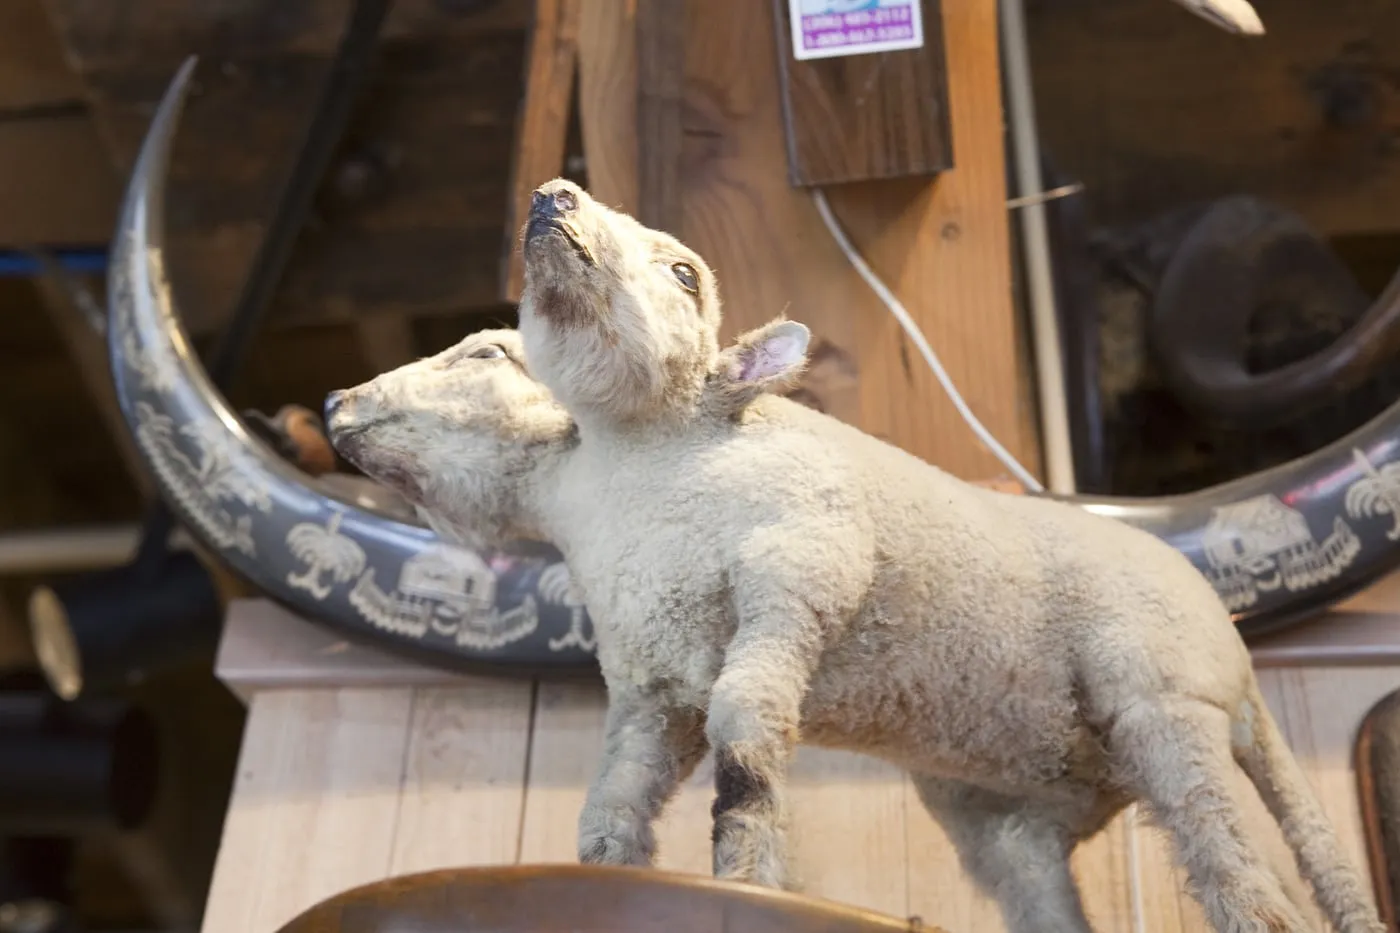 Two-headed animal at Ye Olde Curiosity Shoppe in Seattle, Washington